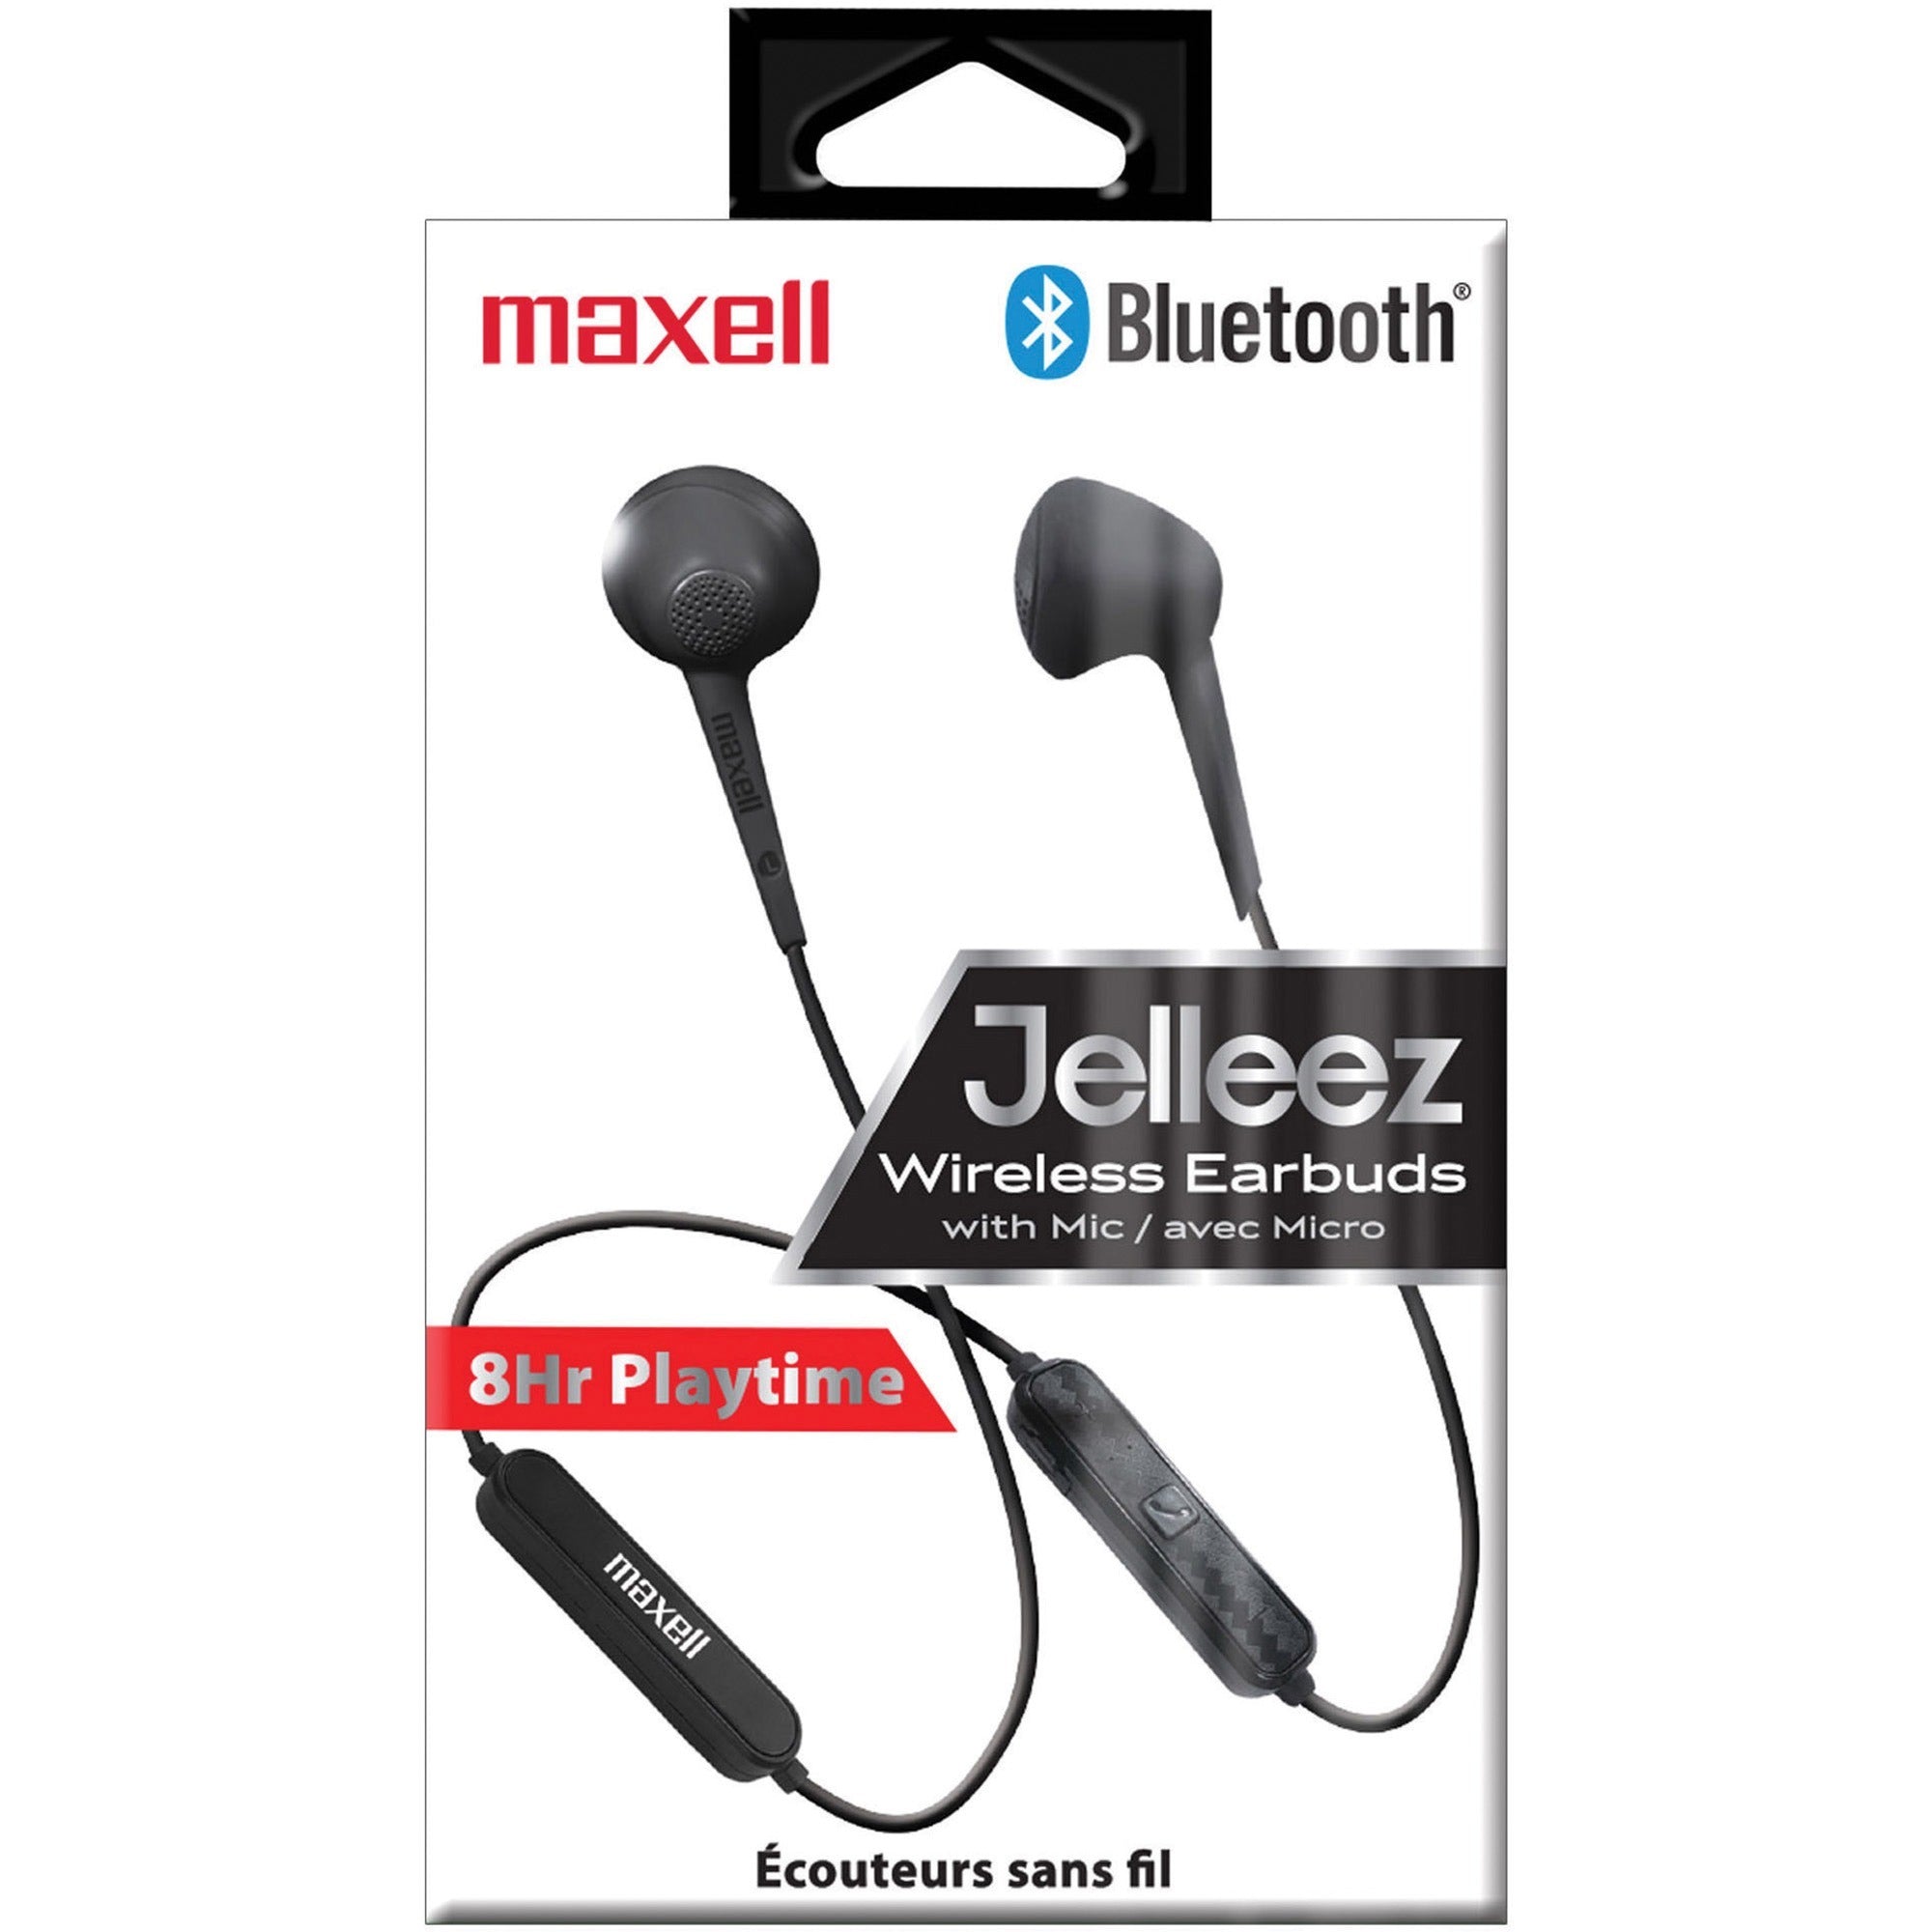 maxell-jelleez-earset-wireless-bluetooth-earbud-black_max198018 - 1